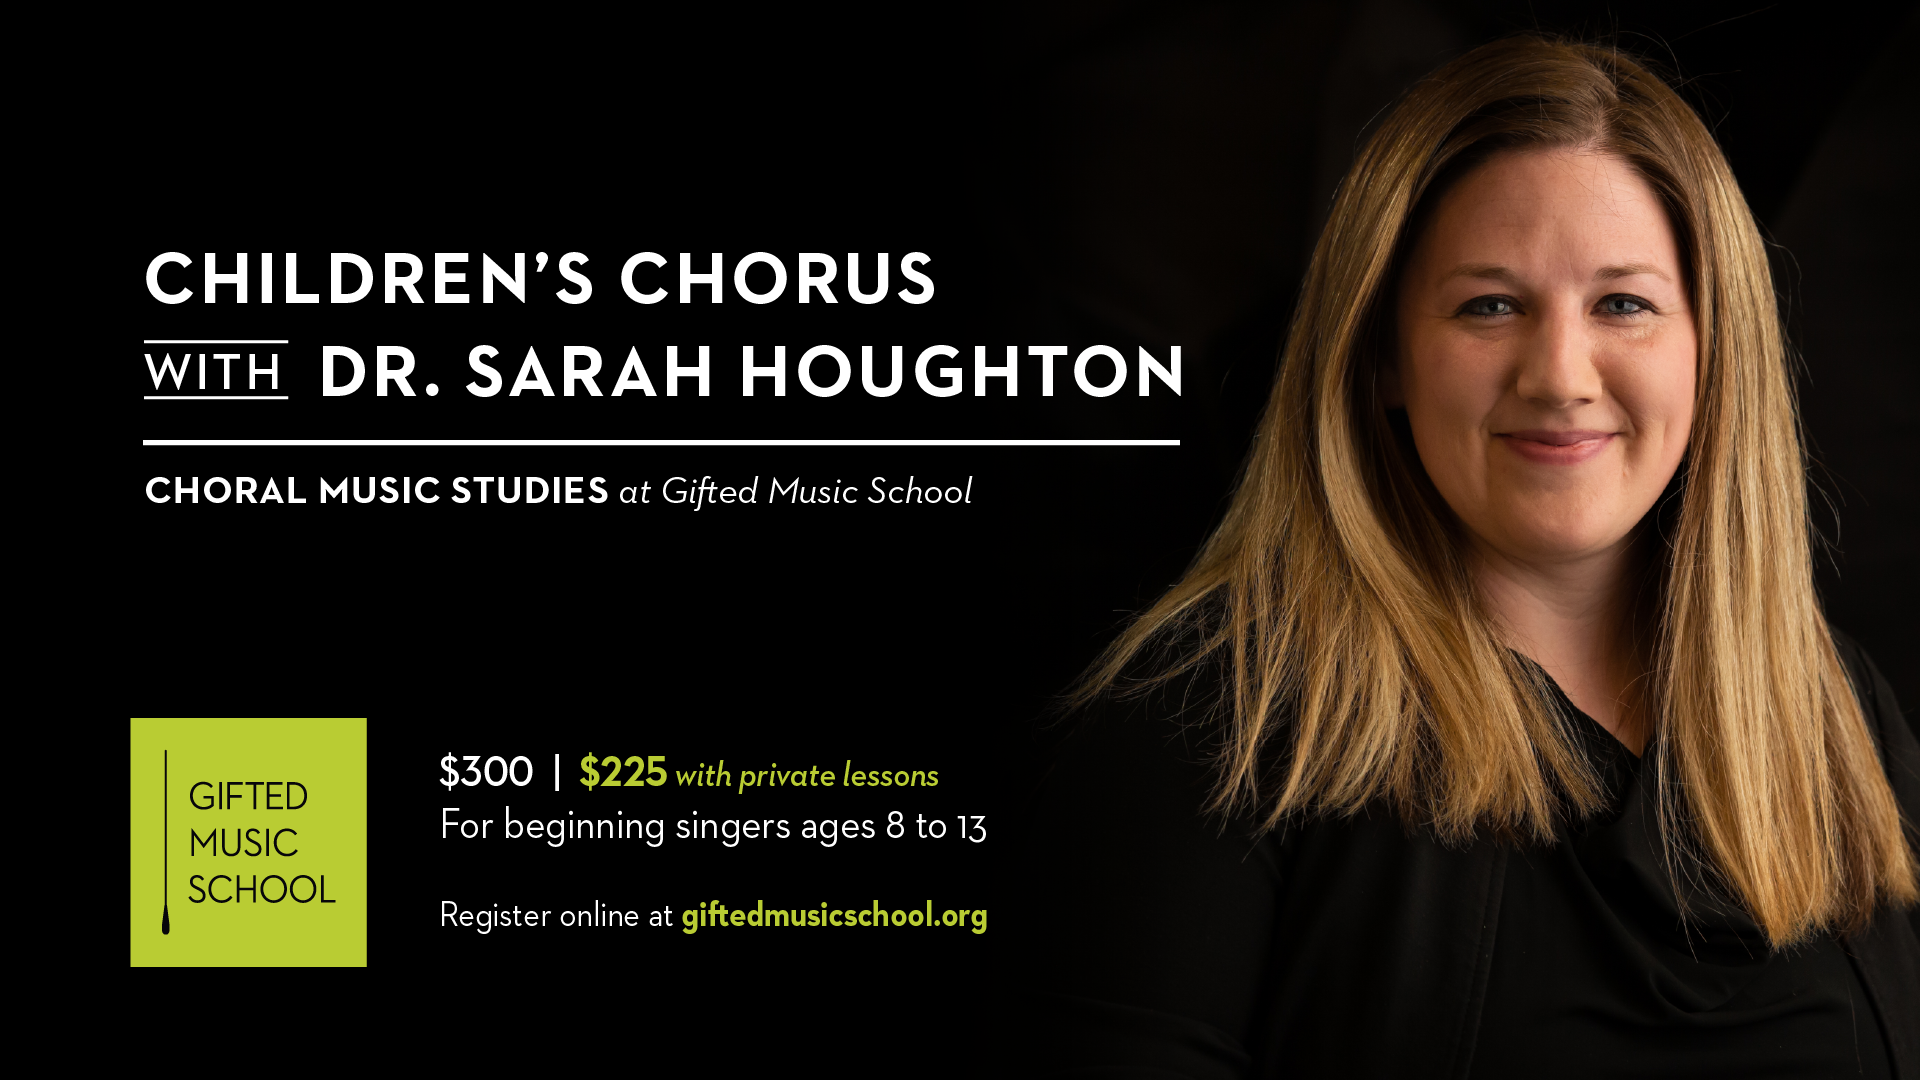 Gifted Music School Children's Chorus Choir Class Advertisement with Voice Teacher Dr. Sarah Houghton